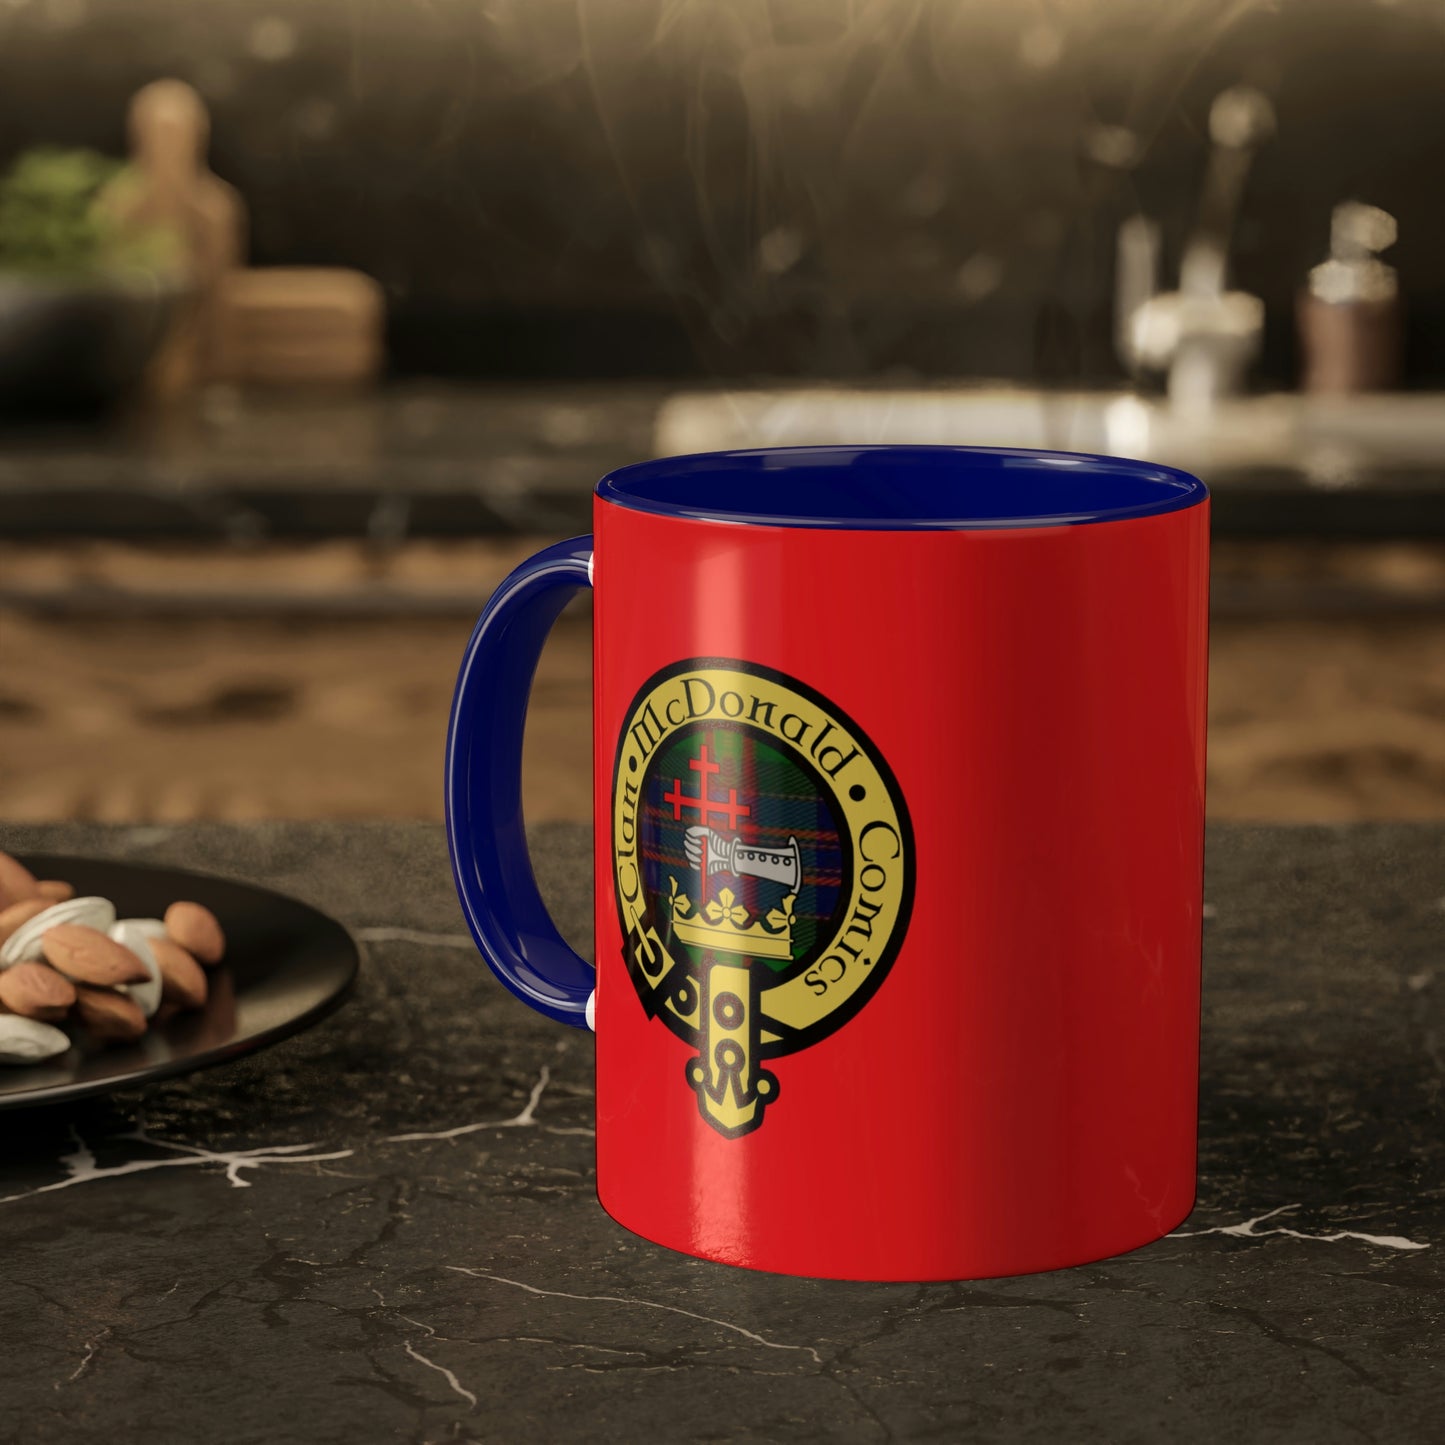 Clan McDonald Comics Coffee Mug - Red